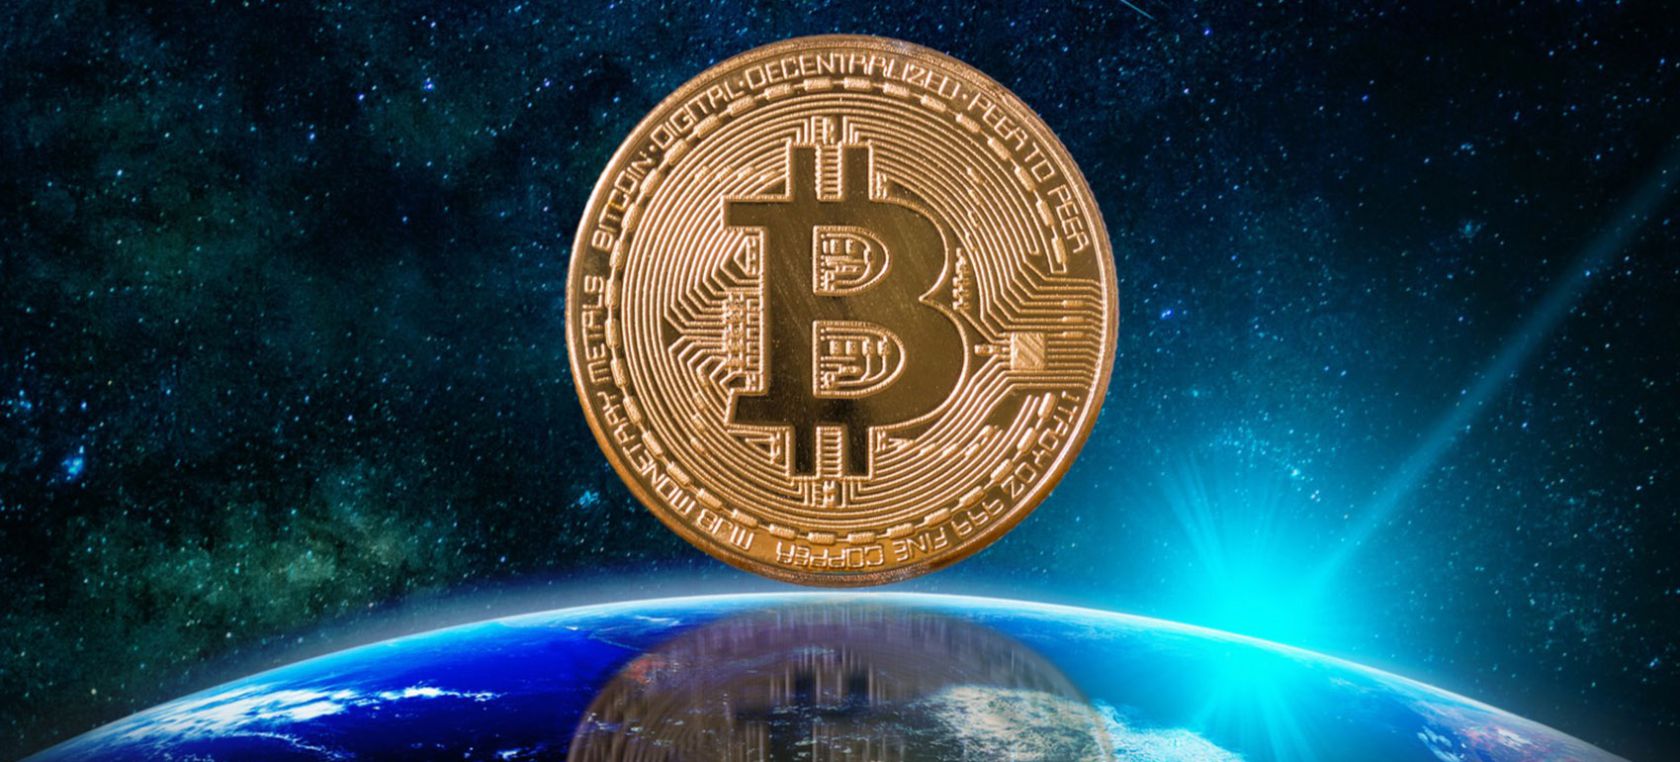 “Bitcoin unirá al mundo” - dice Jack Dorsey